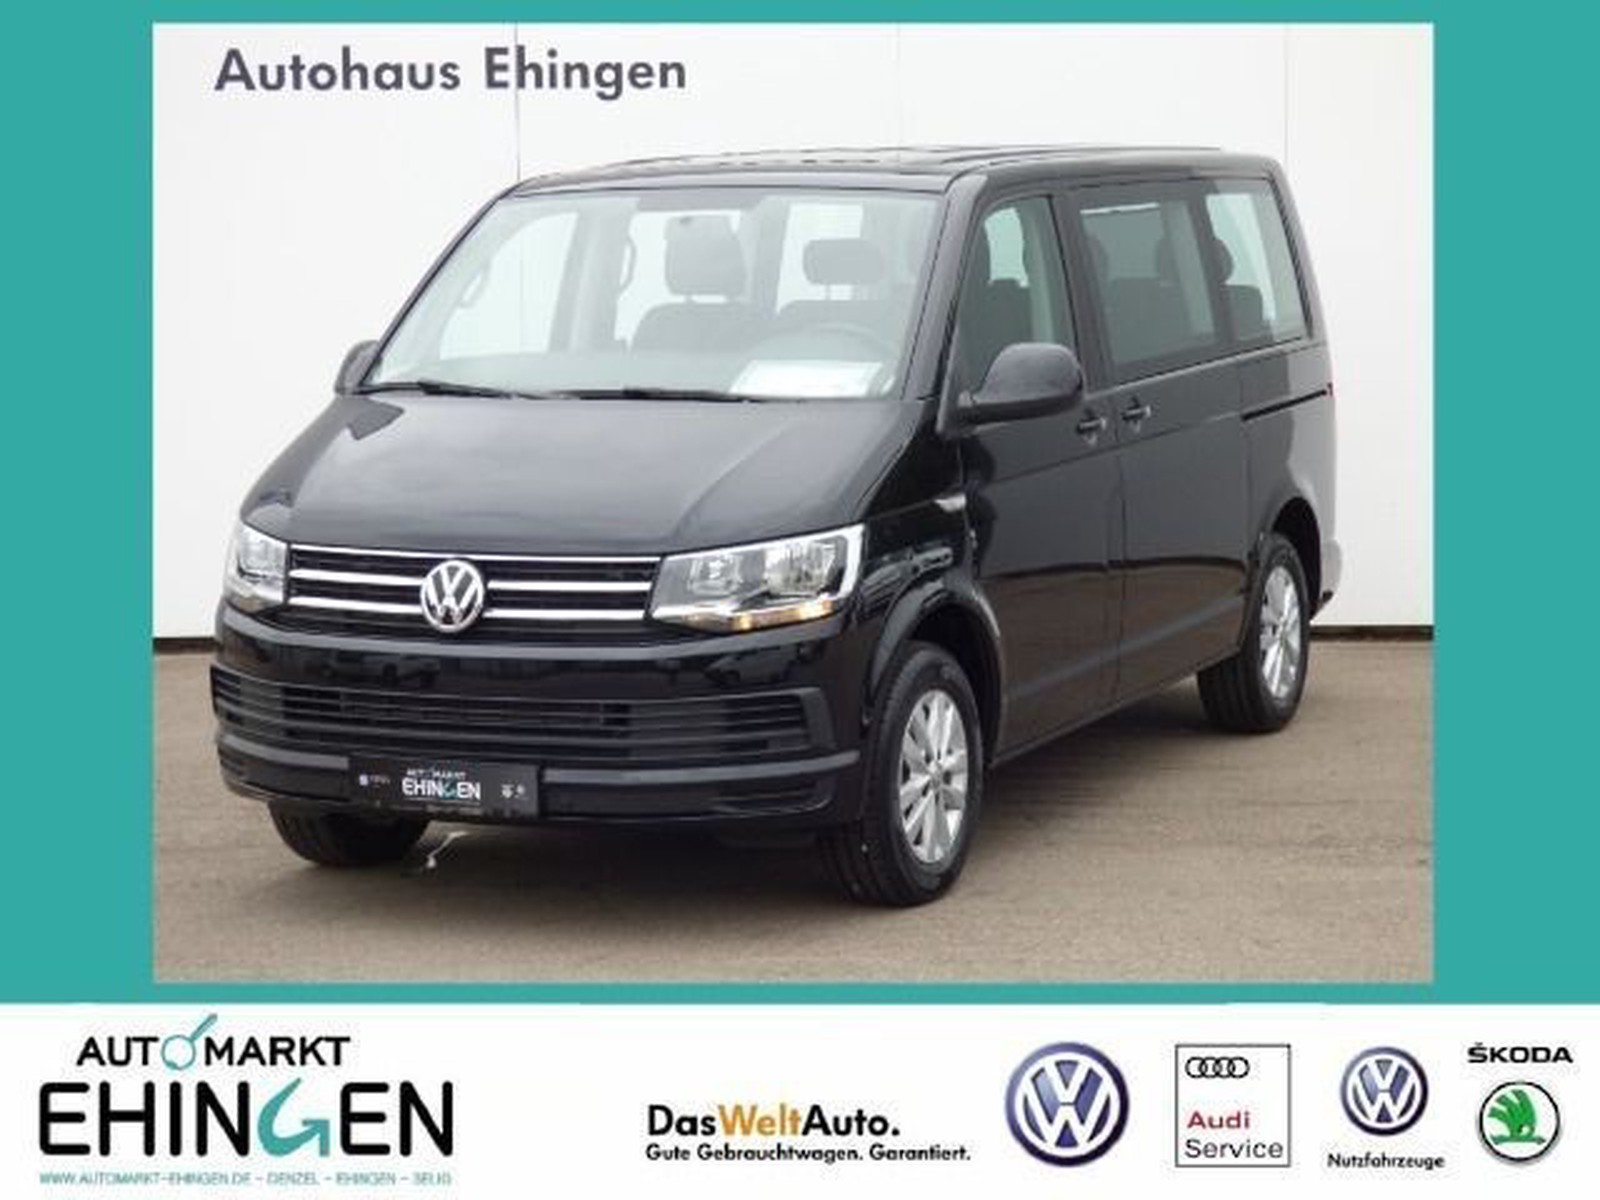 Volkswagen T5 Multivan Van/Kleinbus in Grau gebraucht in Bad